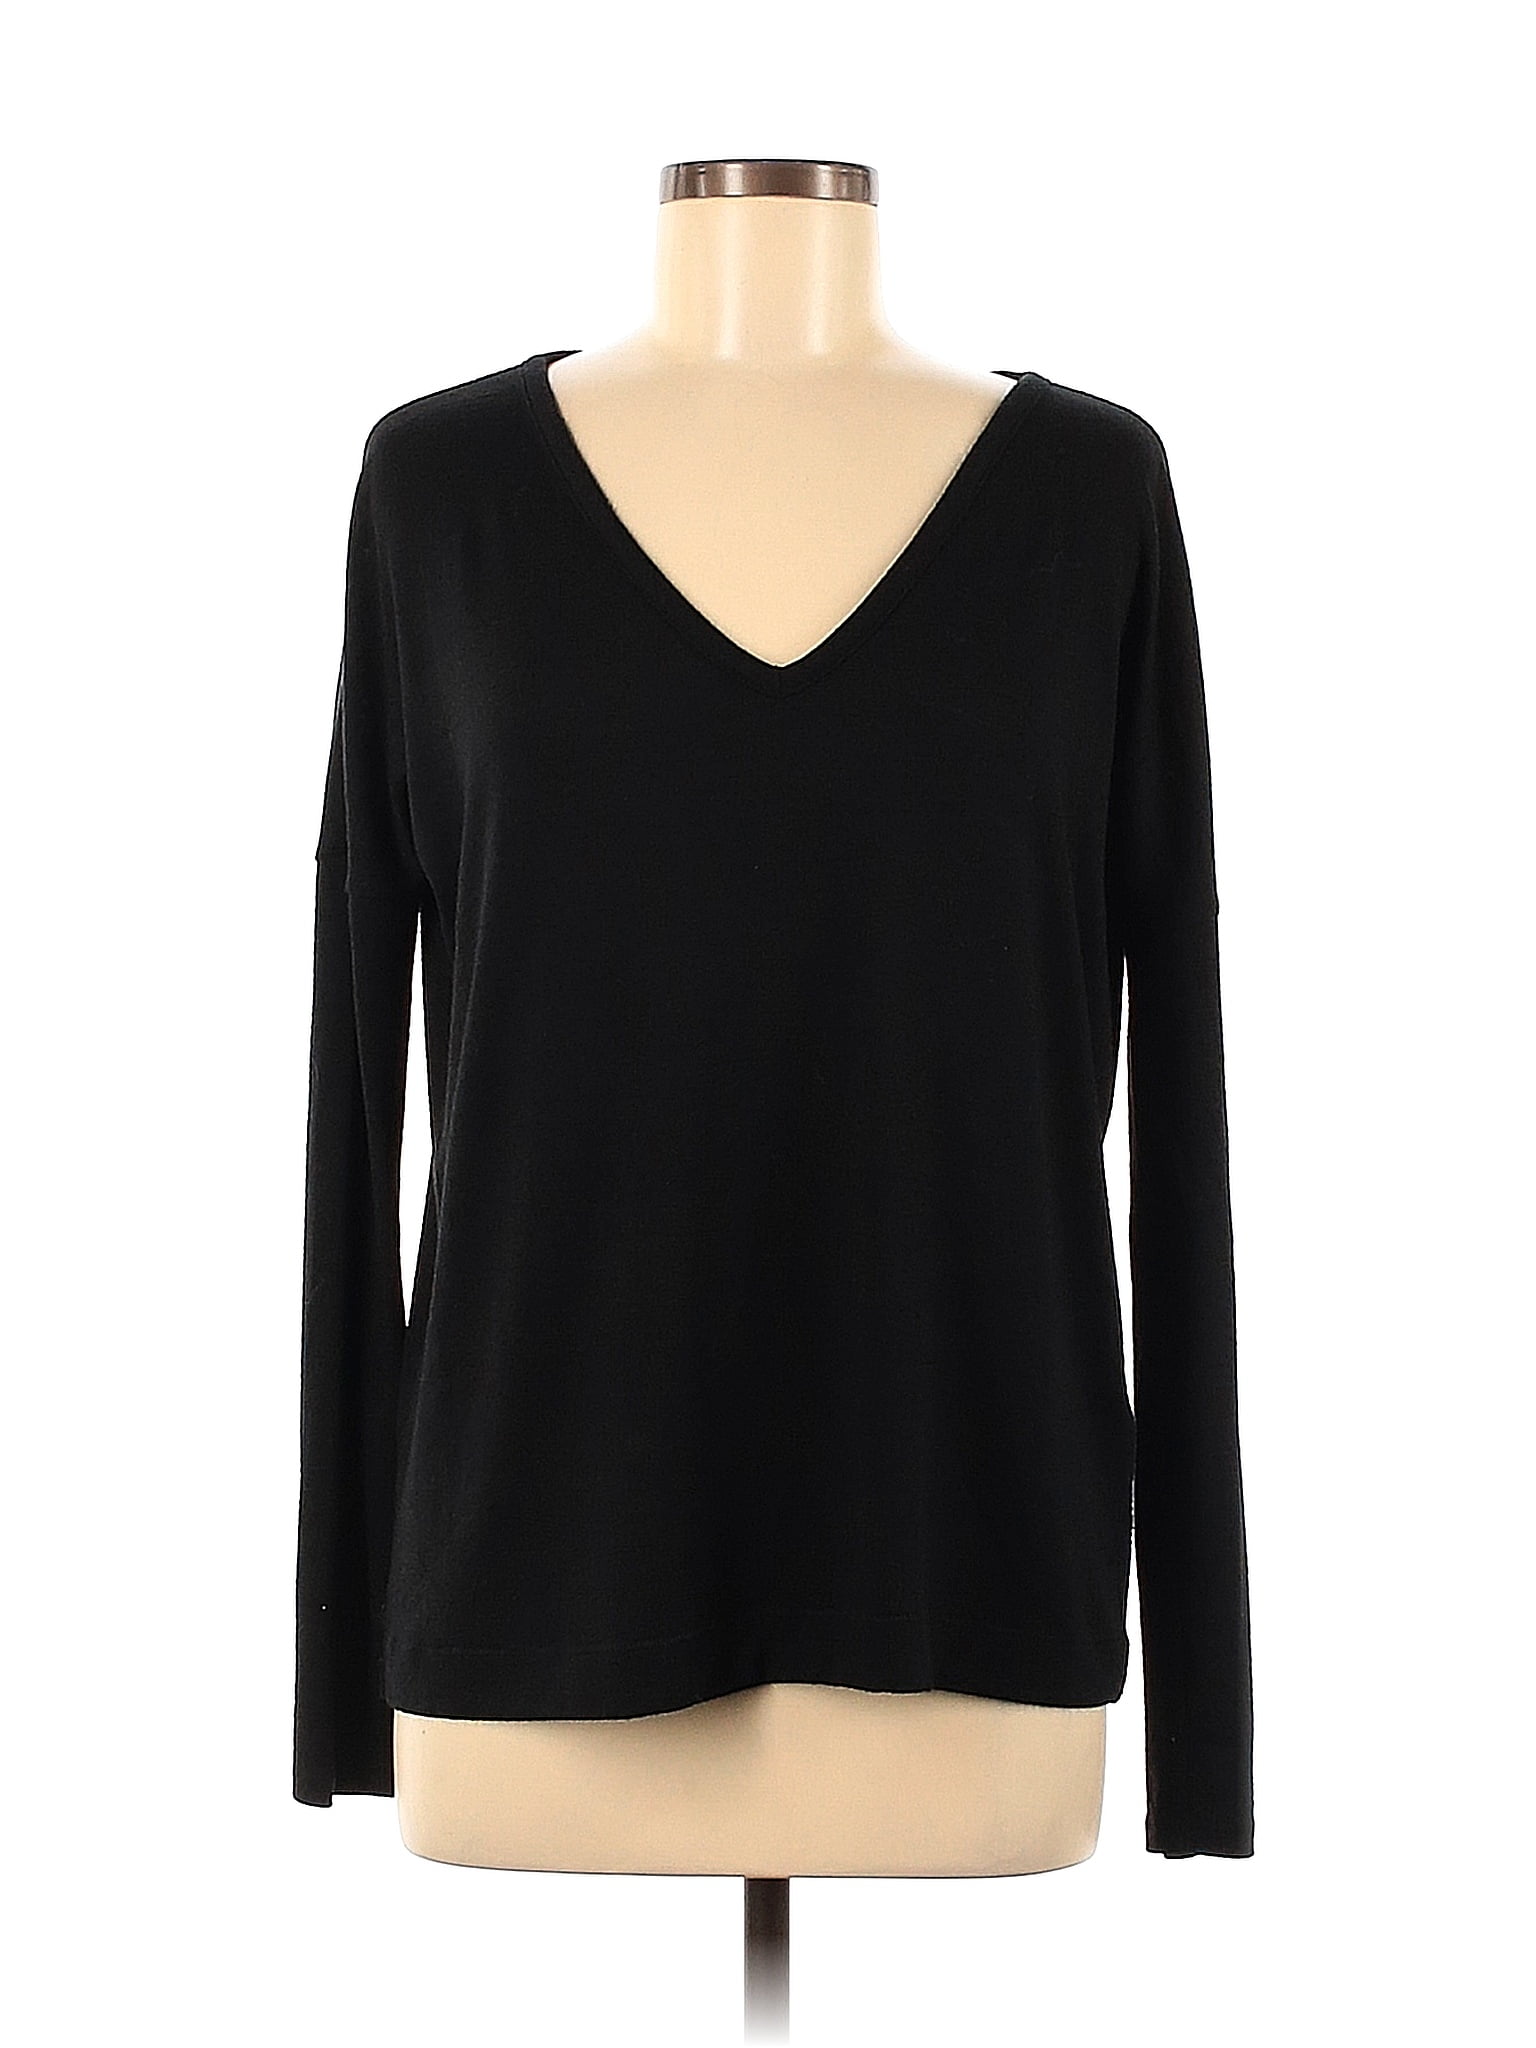 Rag & Bone Black Pullover Sweater Size M - 82% off | thredUP